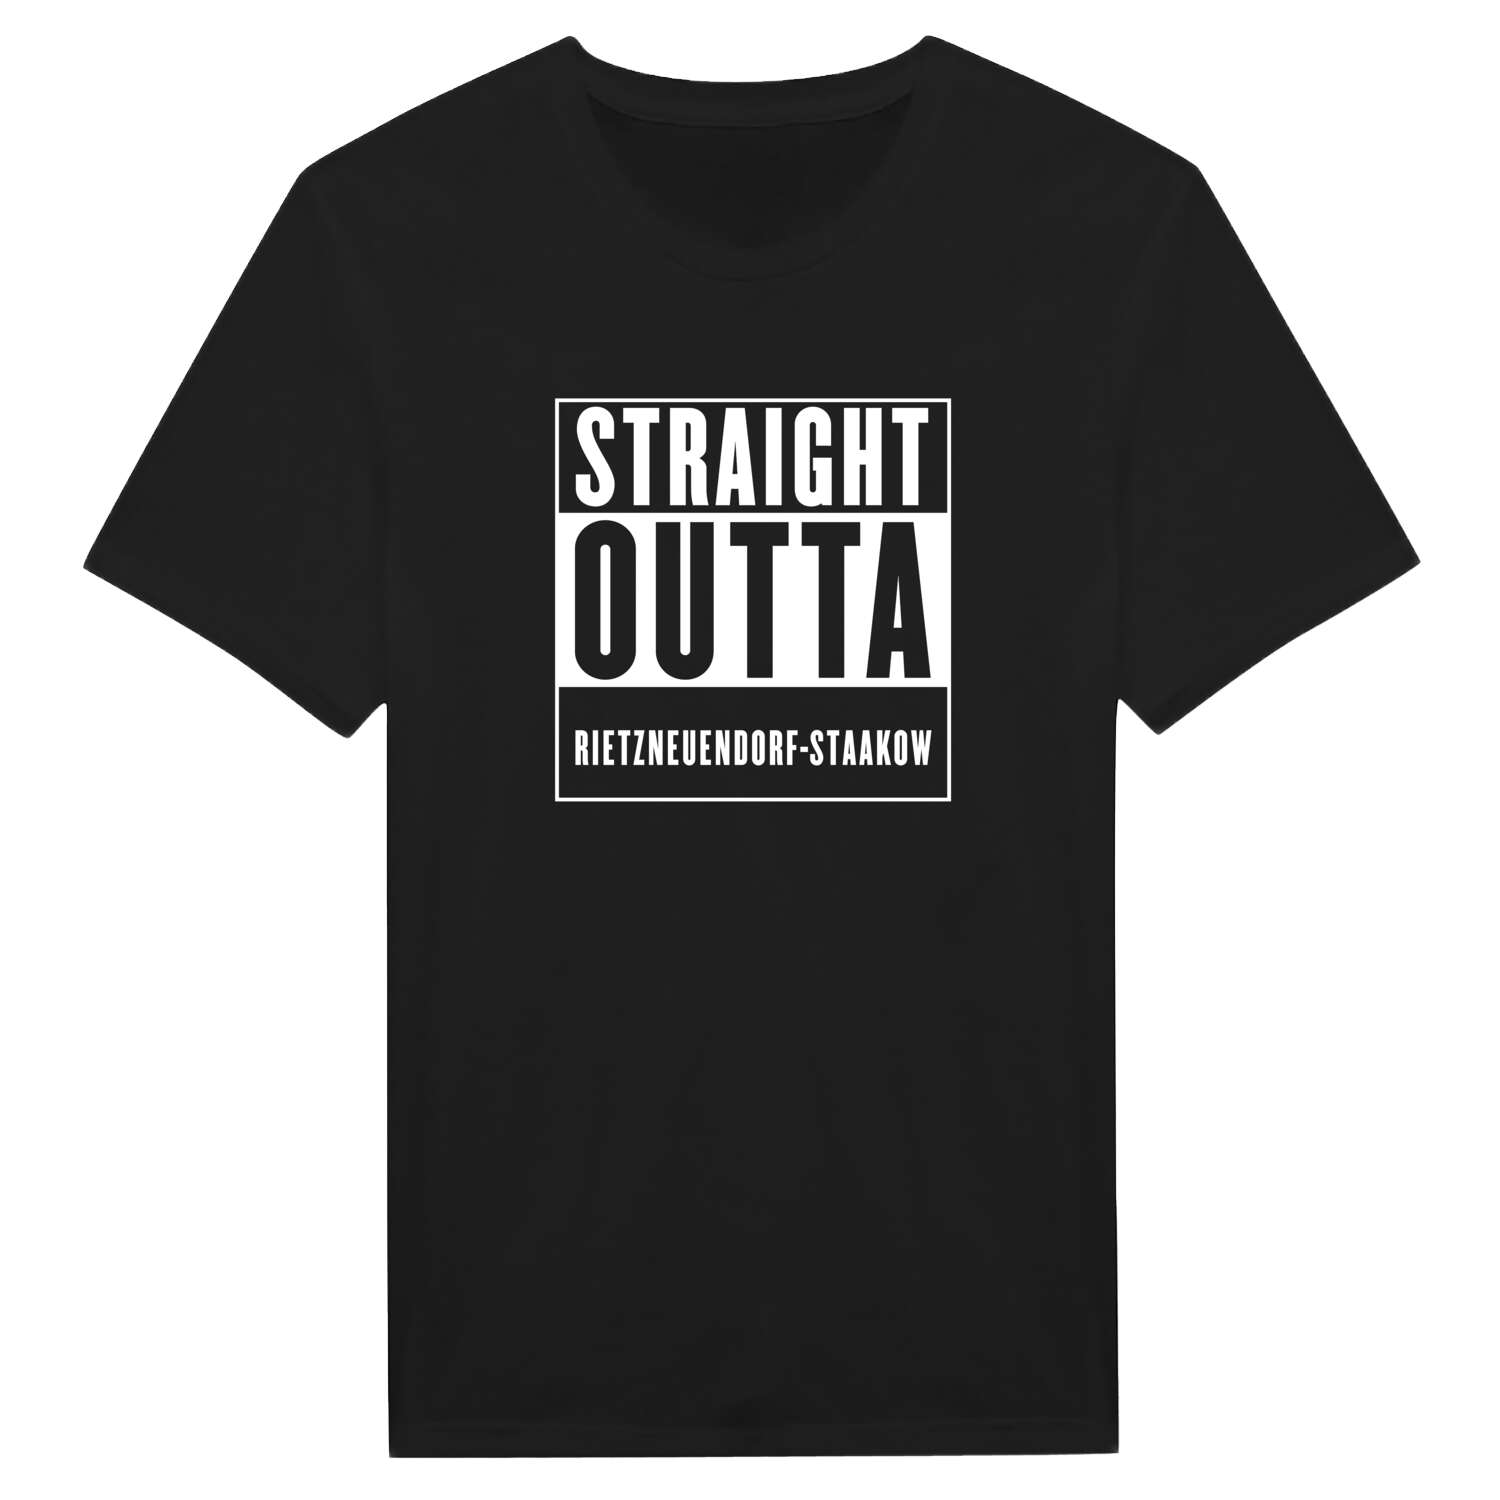 Rietzneuendorf-Staakow T-Shirt »Straight Outta«